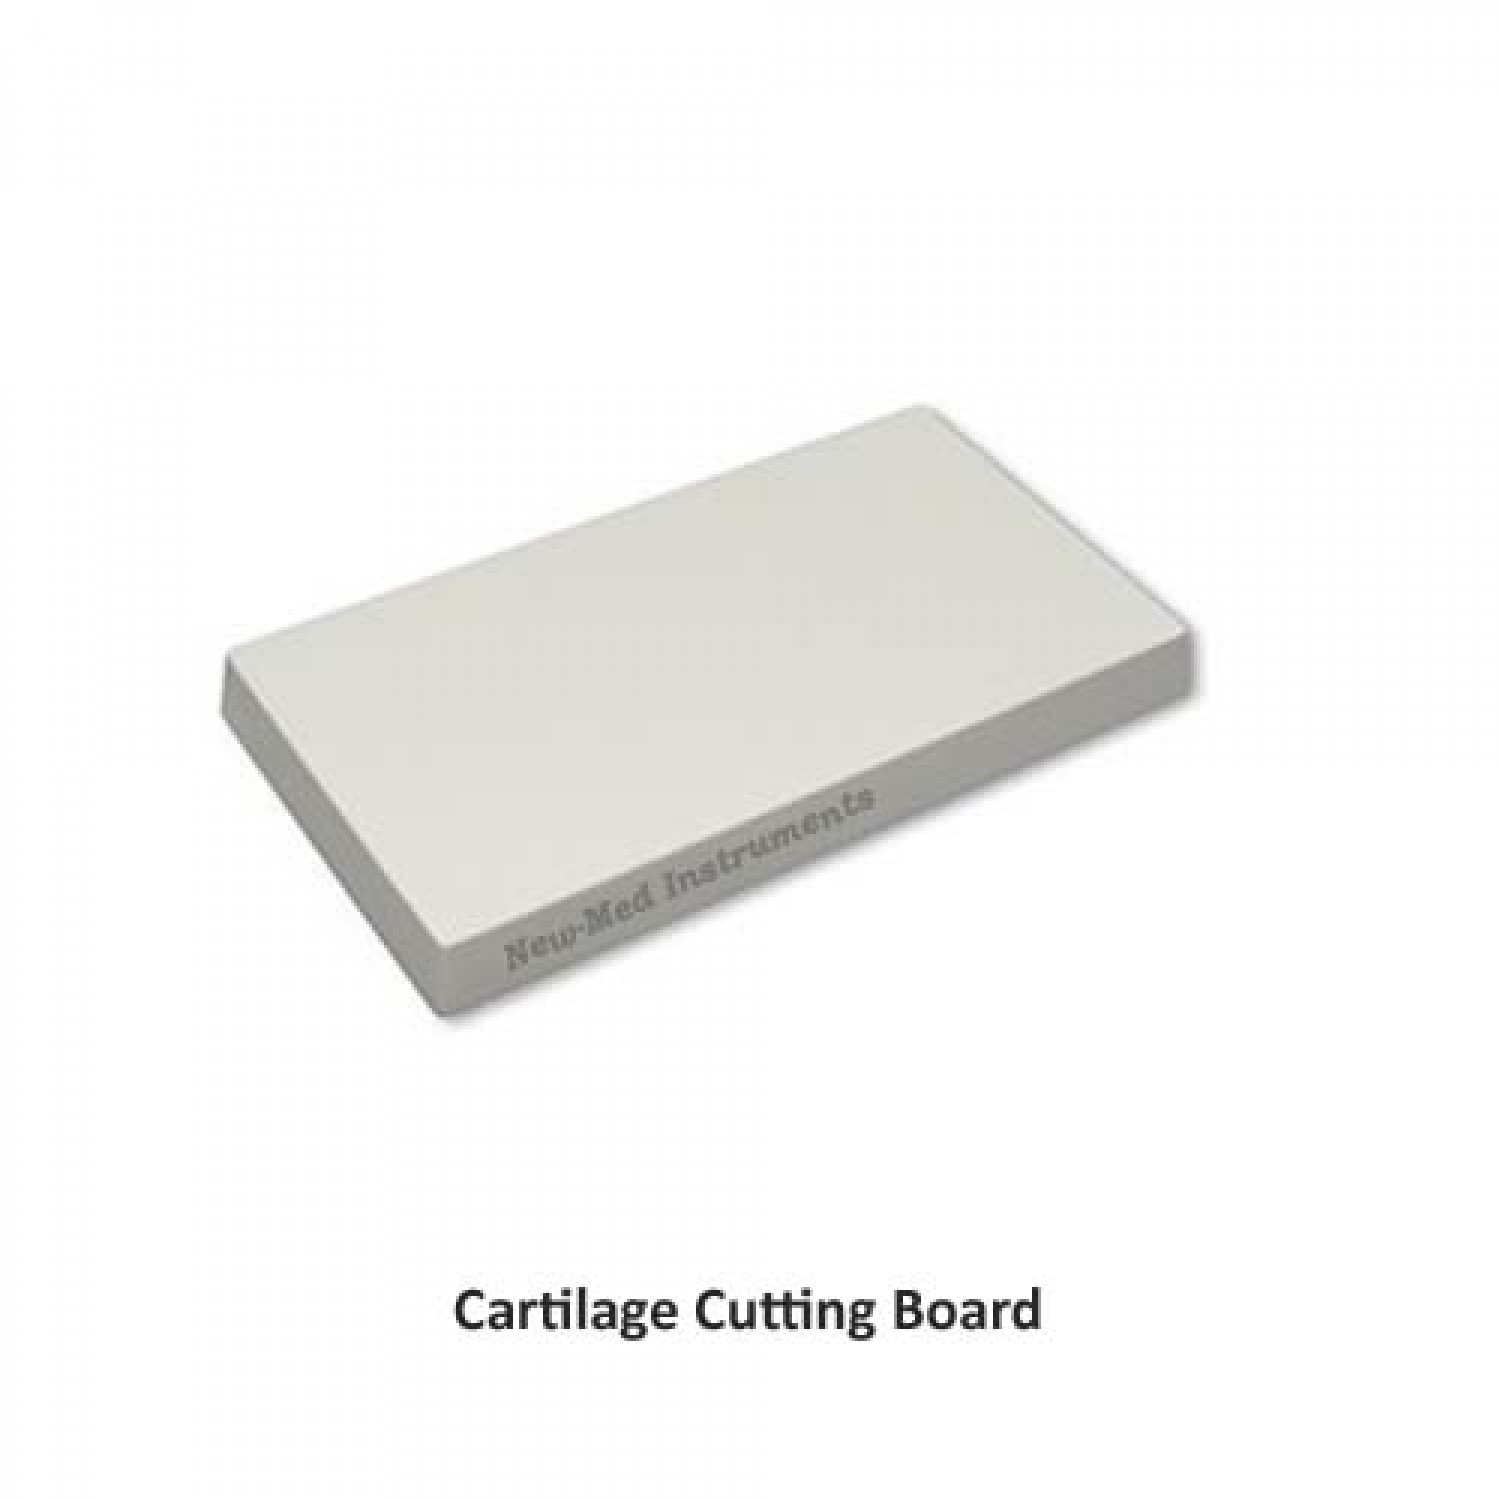 Cartilage Cutting Board Teflon 85.0 mm x 55.0 mm x 10.0 mm